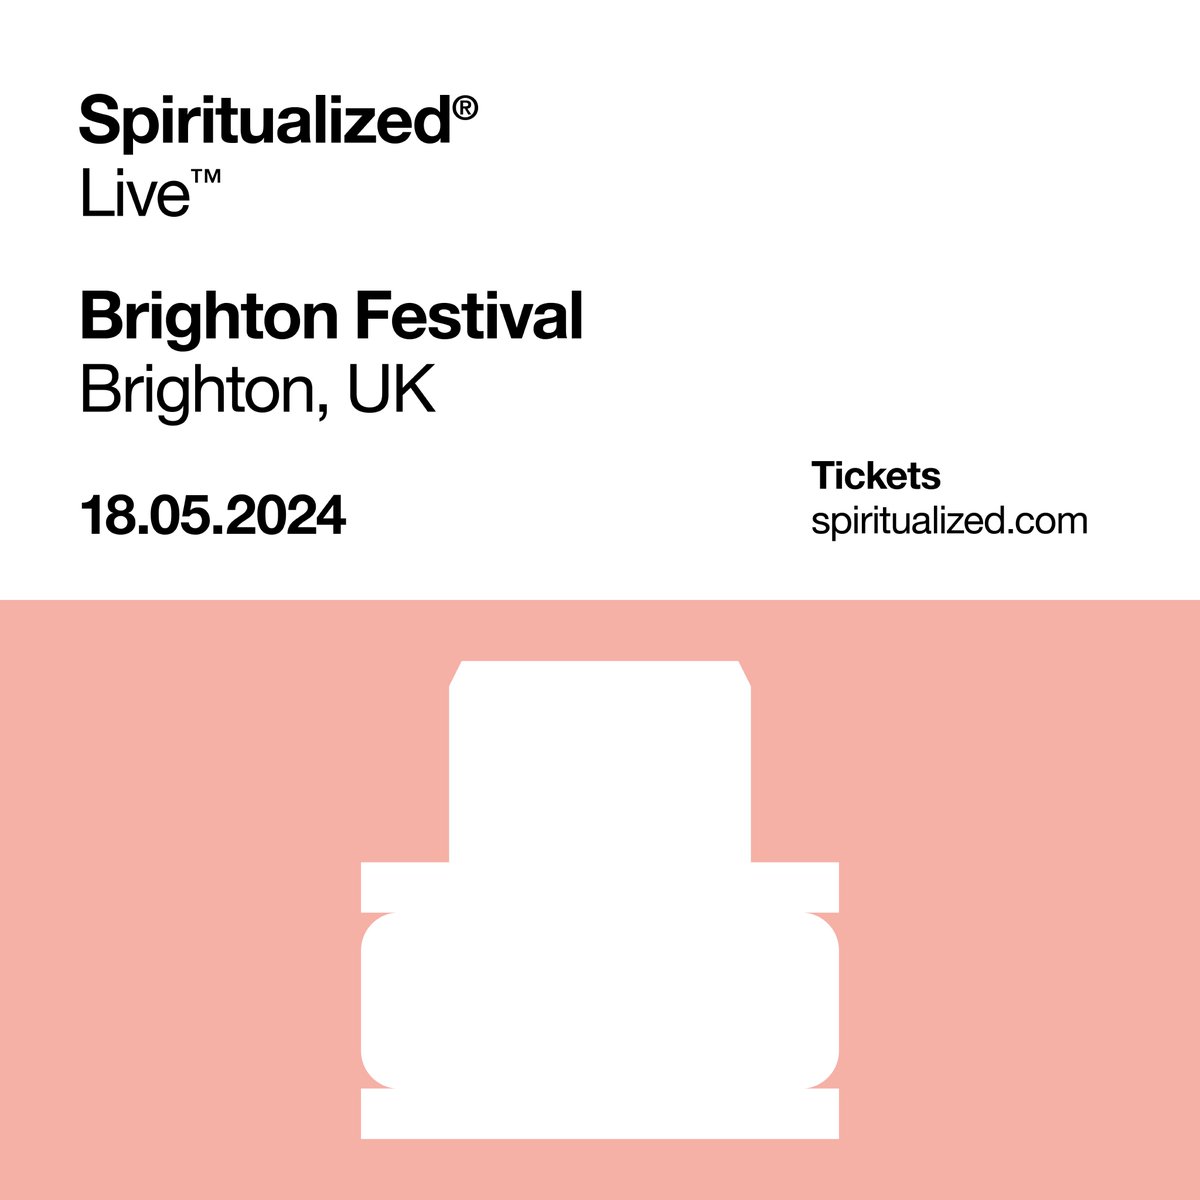 Spiritualized® Live™ @brightfest Brighton, UK 18.05.24 spiritualized.com